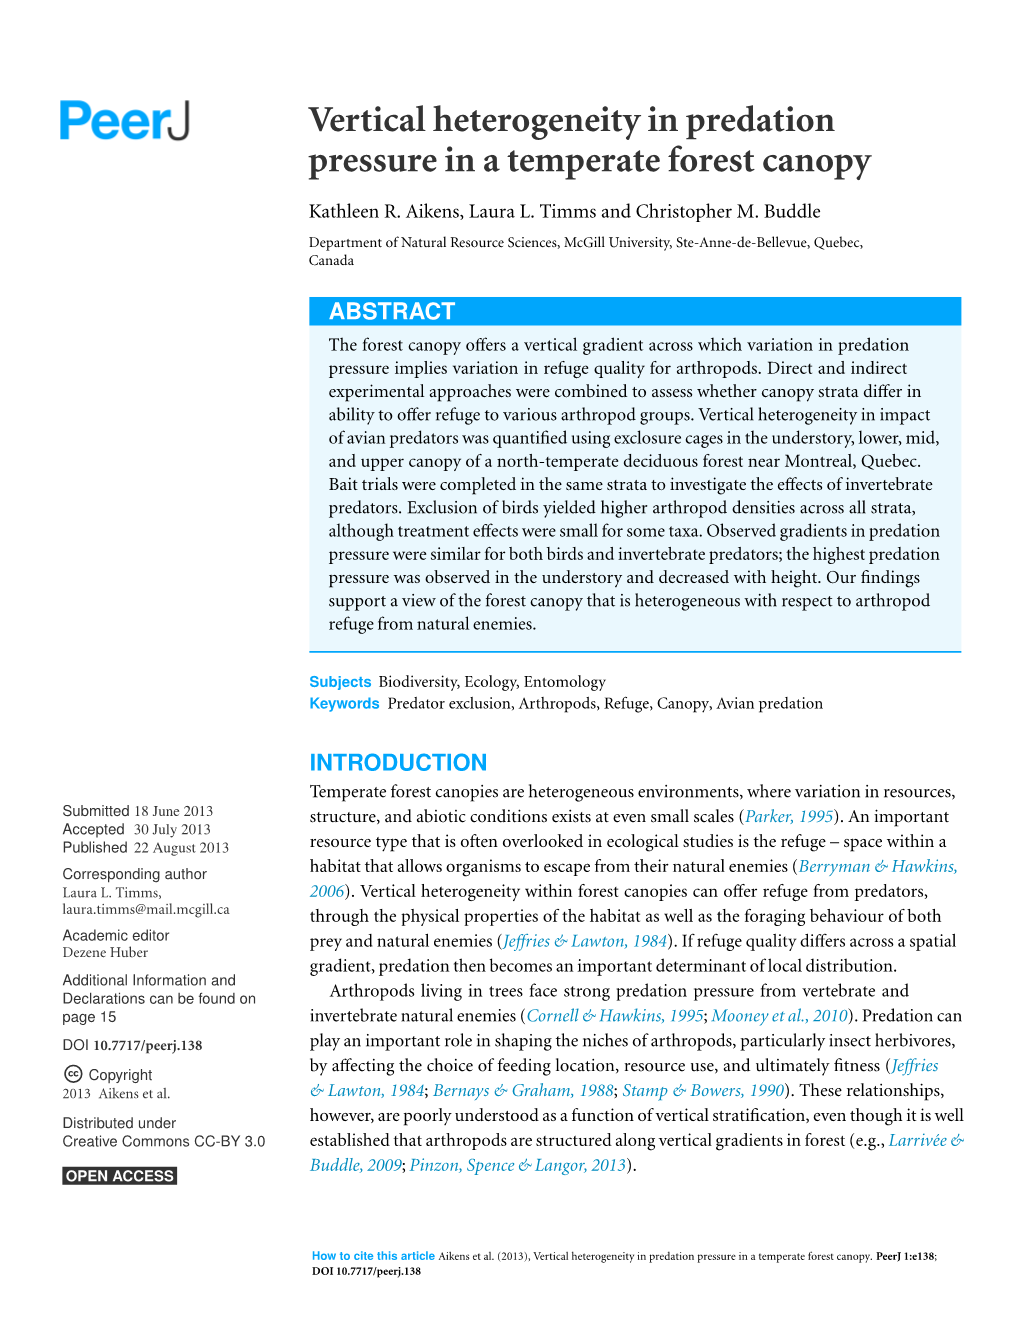 Vertical Heterogeneity in Predation Pressure in a Temperate Forest Canopy